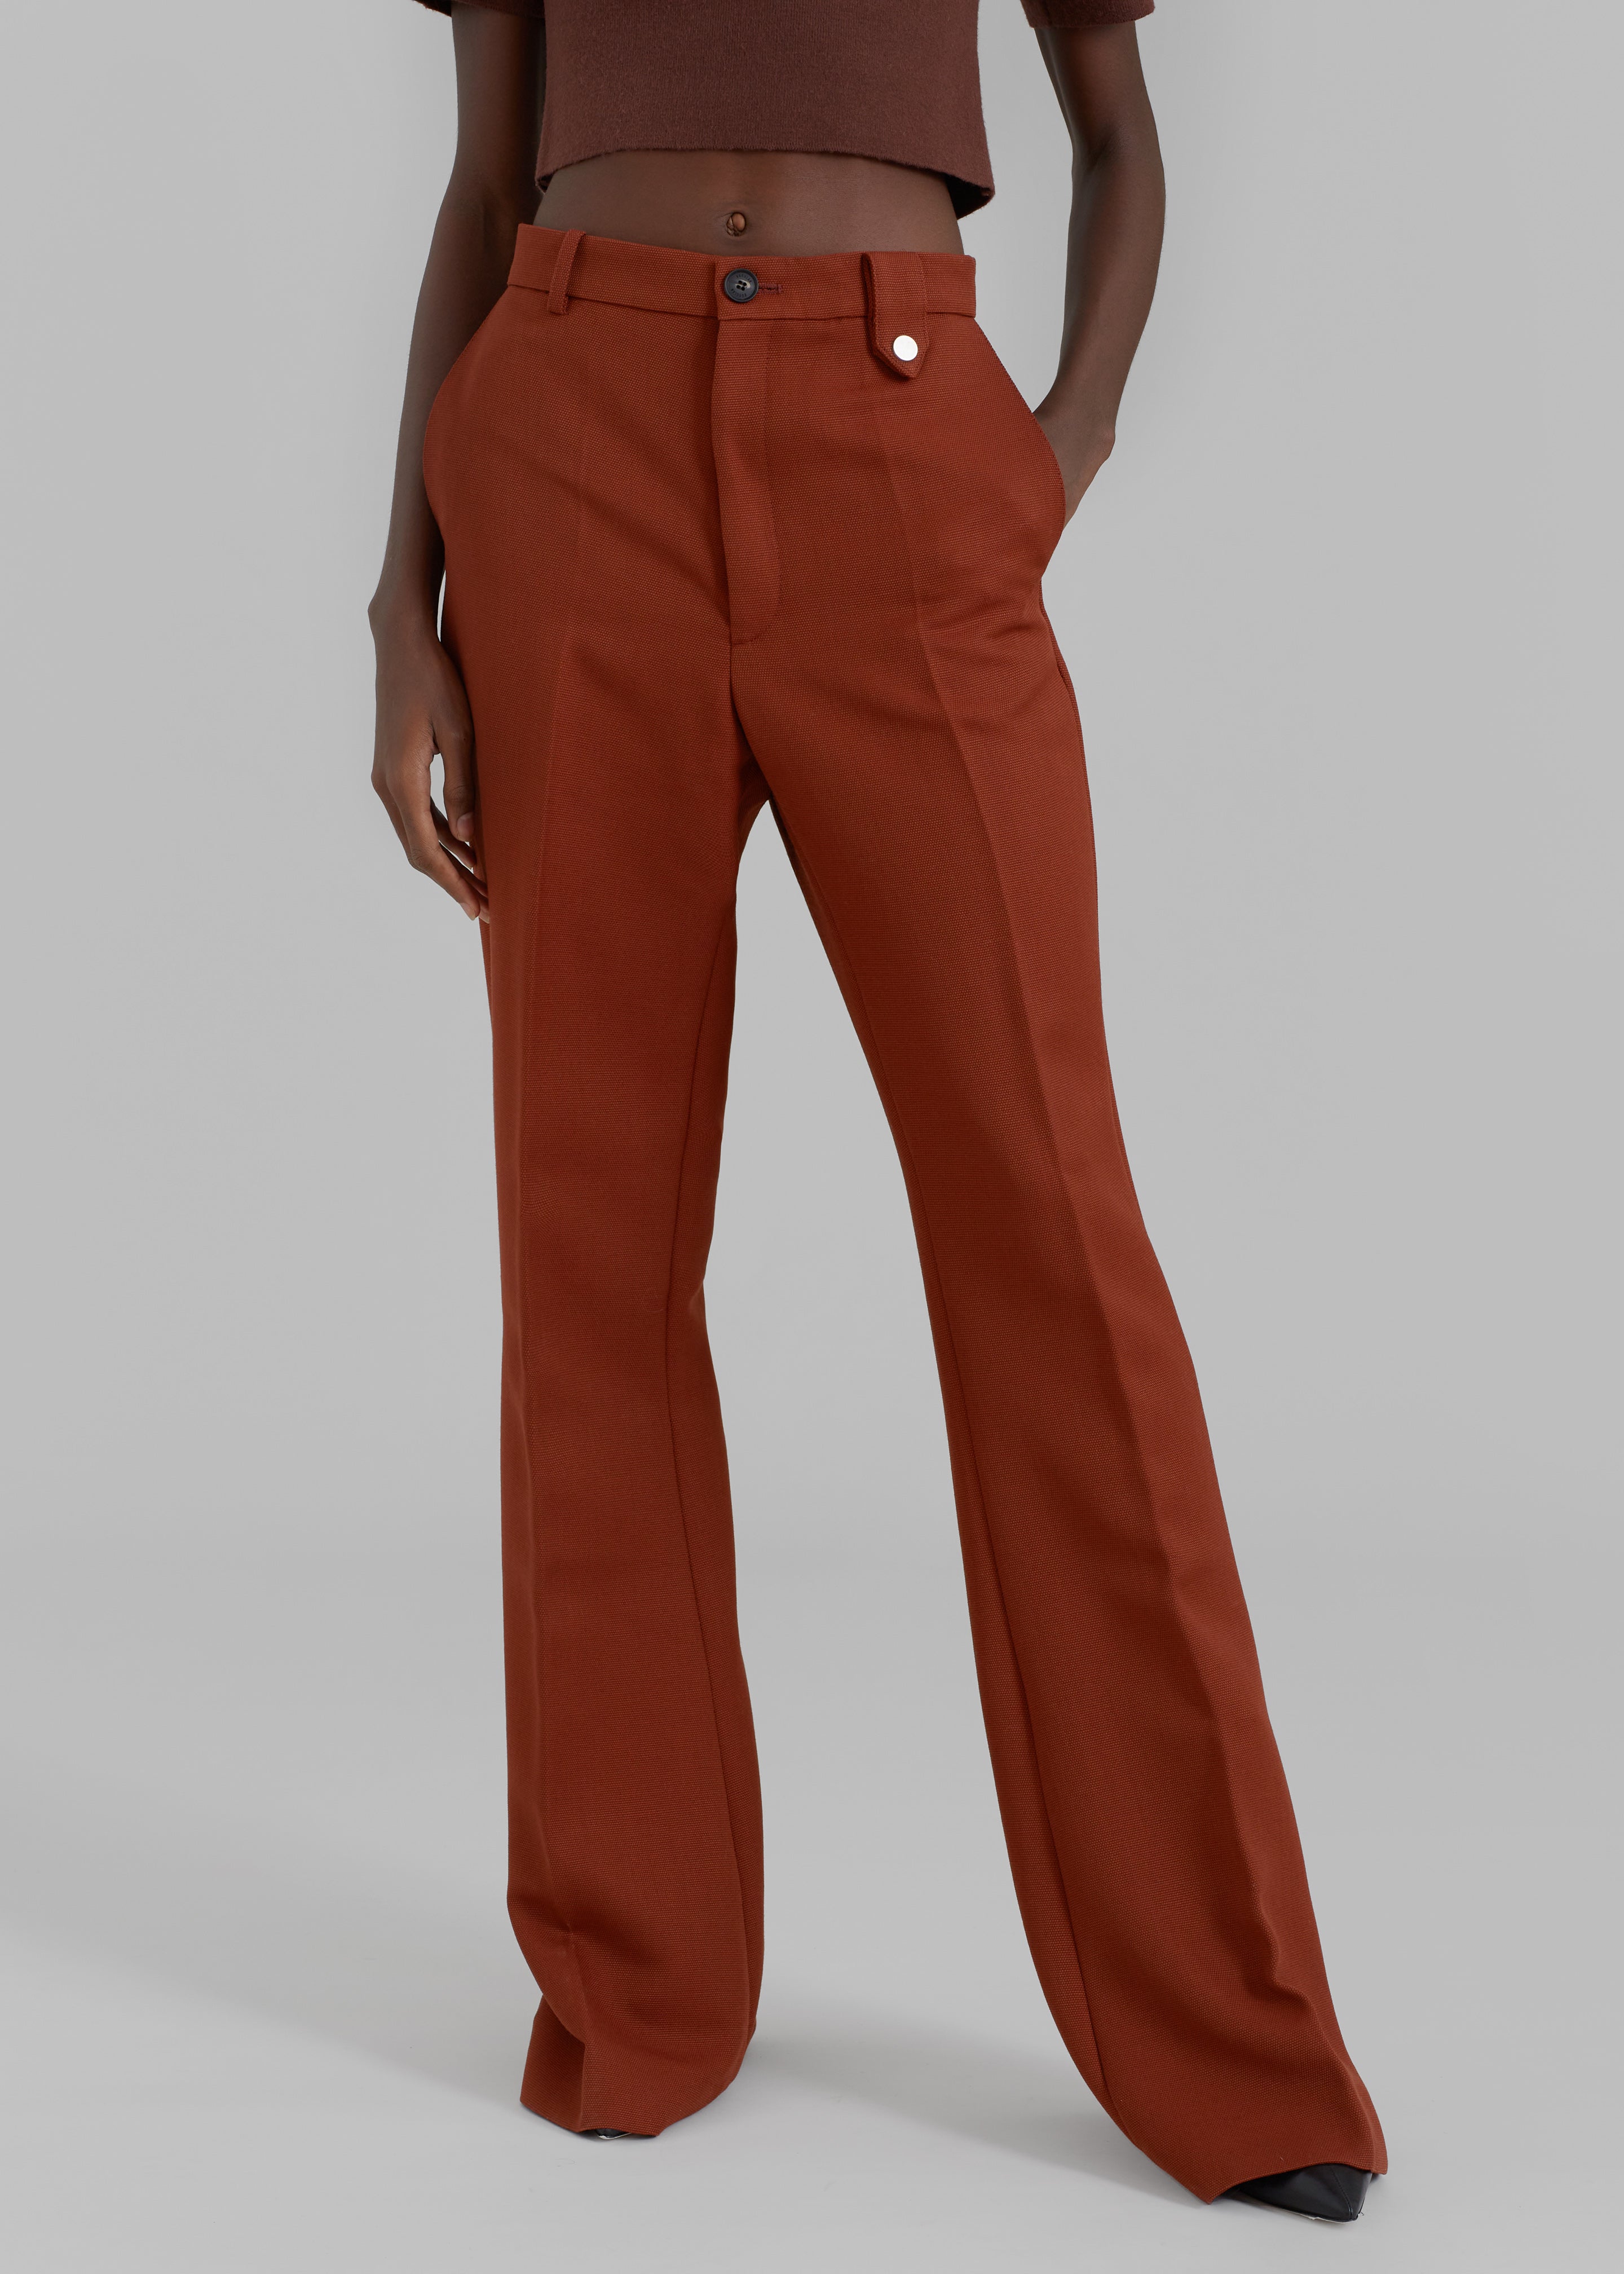 EGONLab Sami Tailored Trousers - Rust Wool - 2